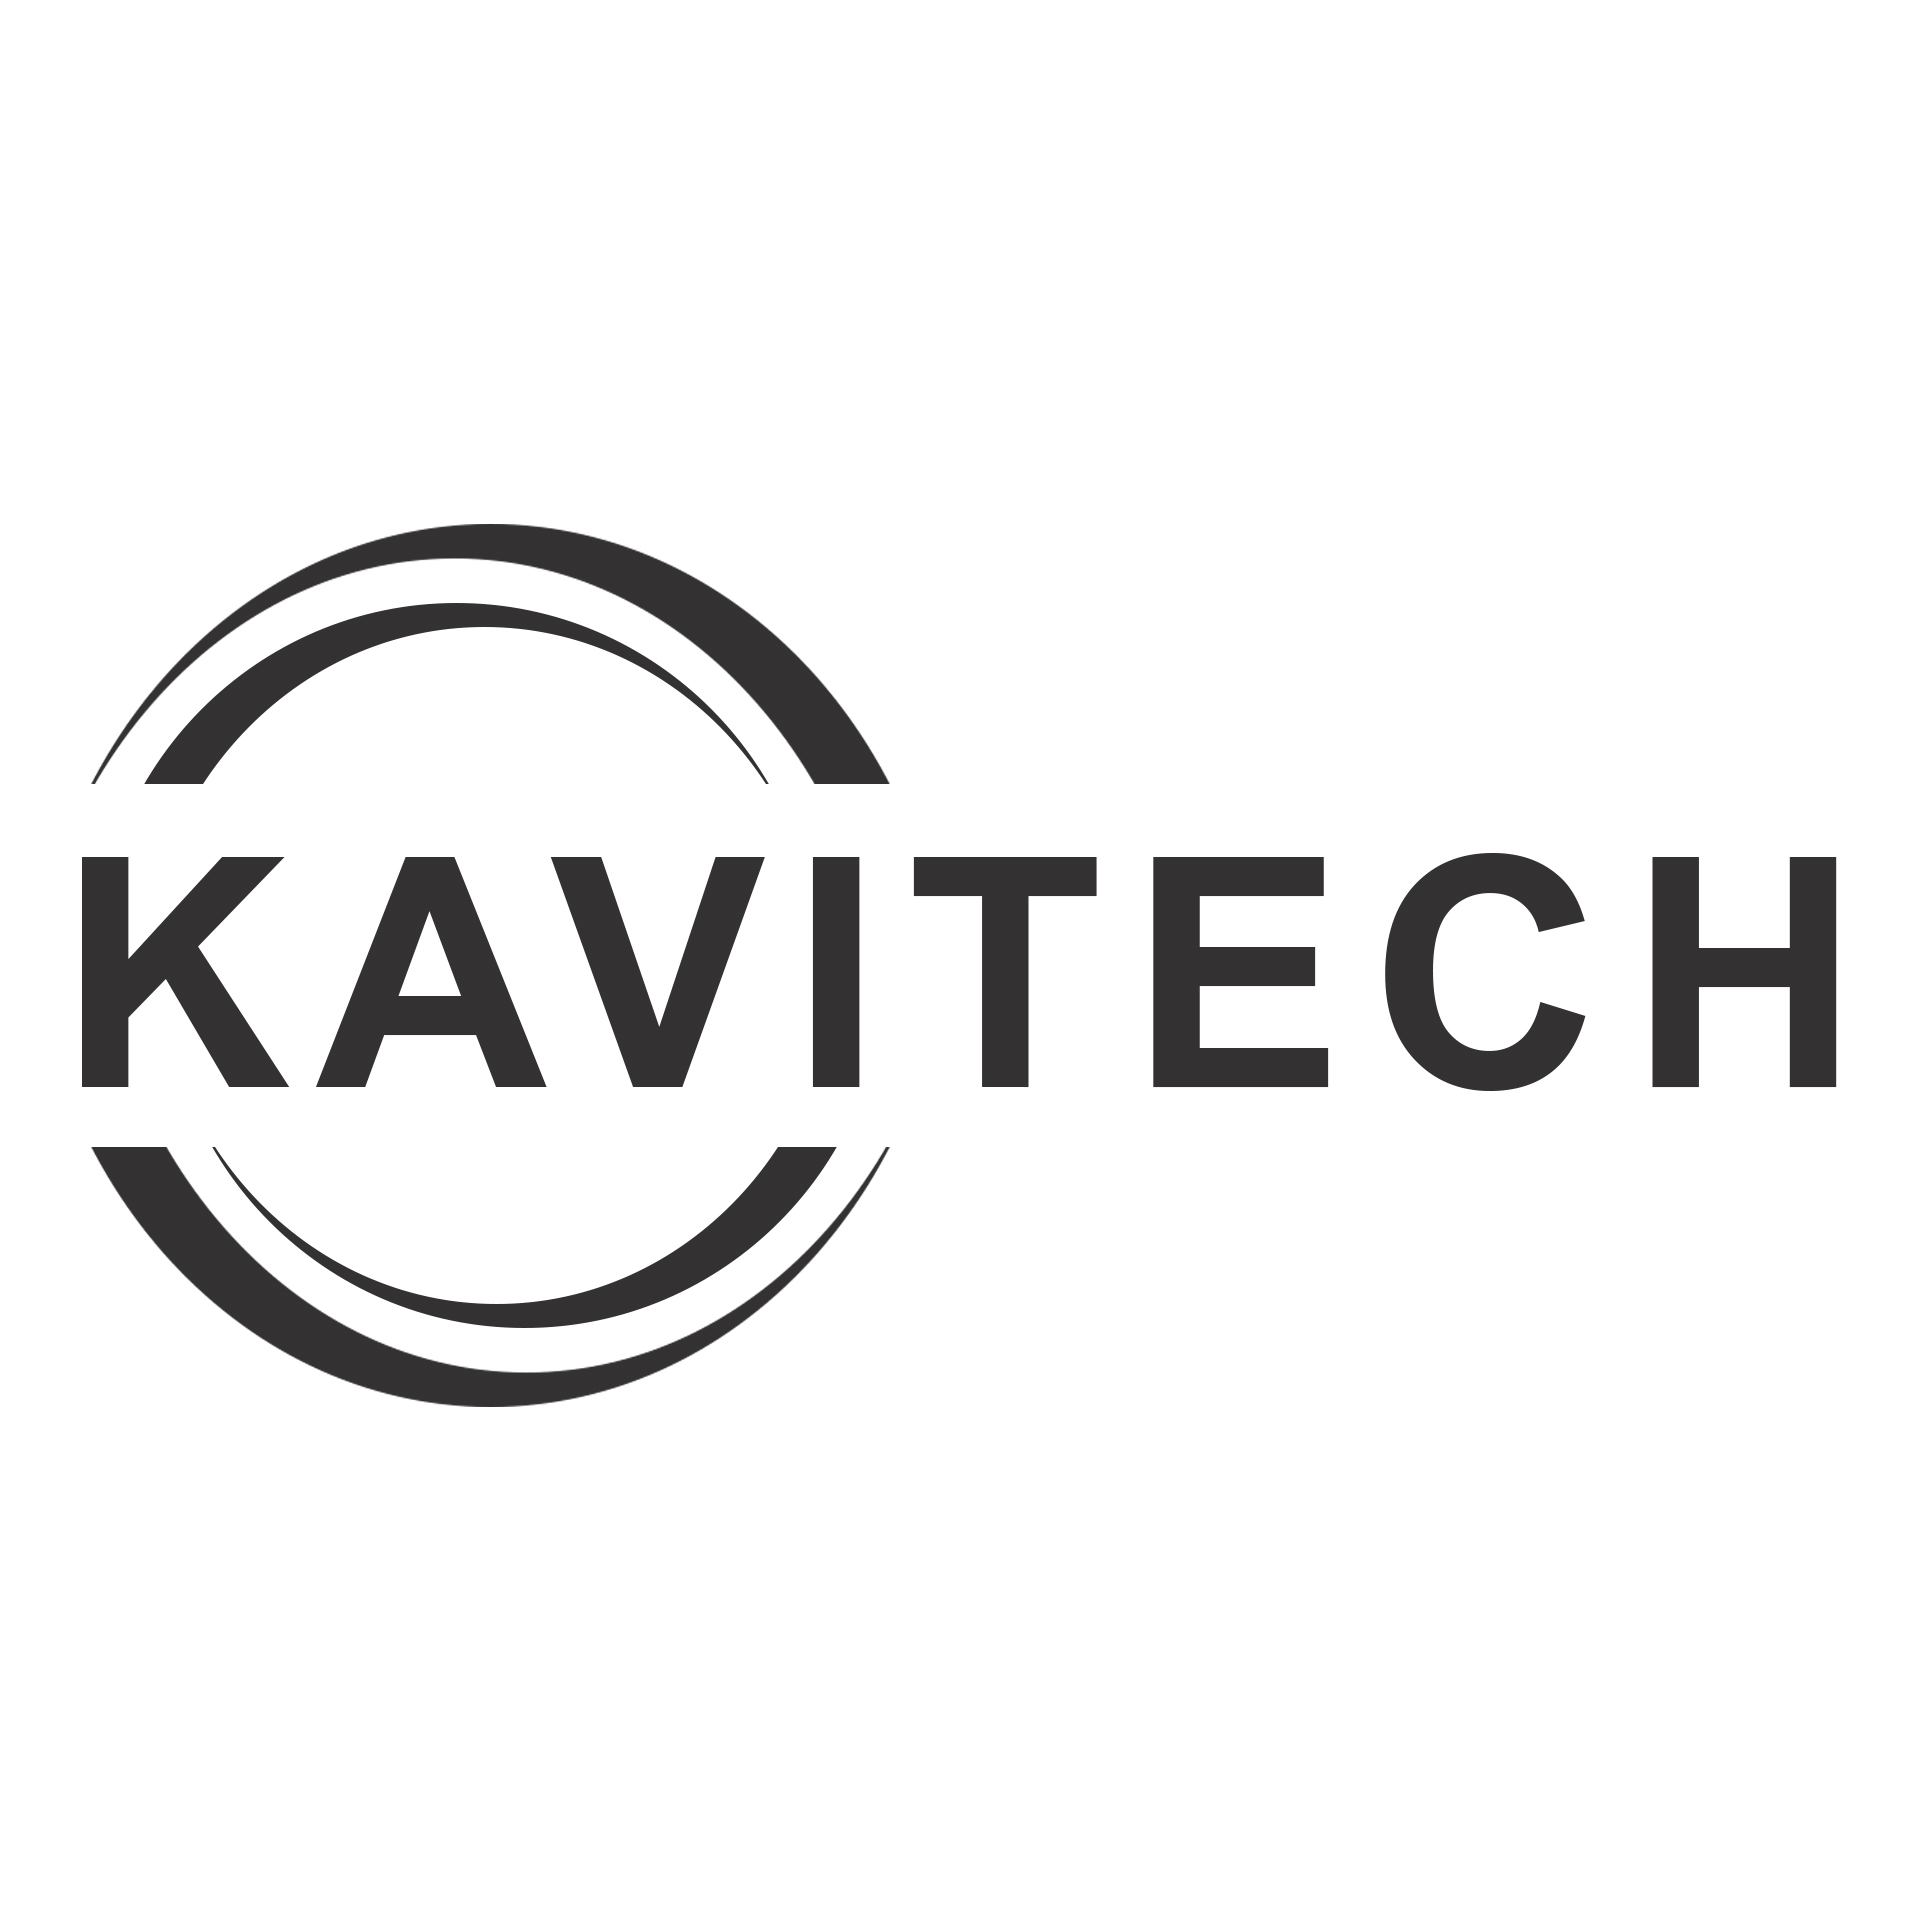 kavitech logo